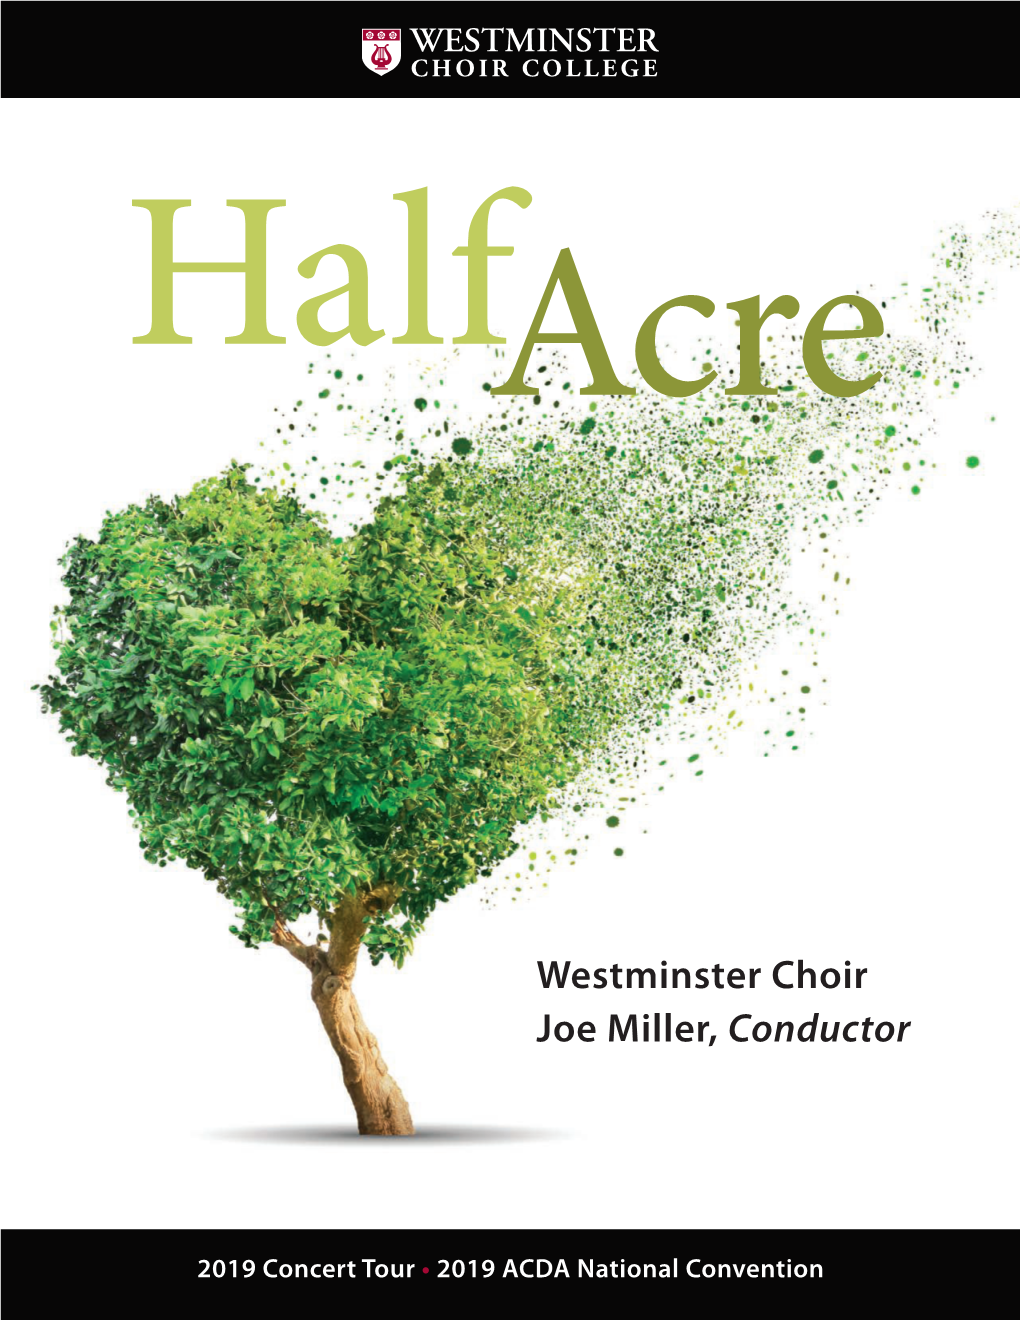 Westminster Choir Joe Miller, Conductor